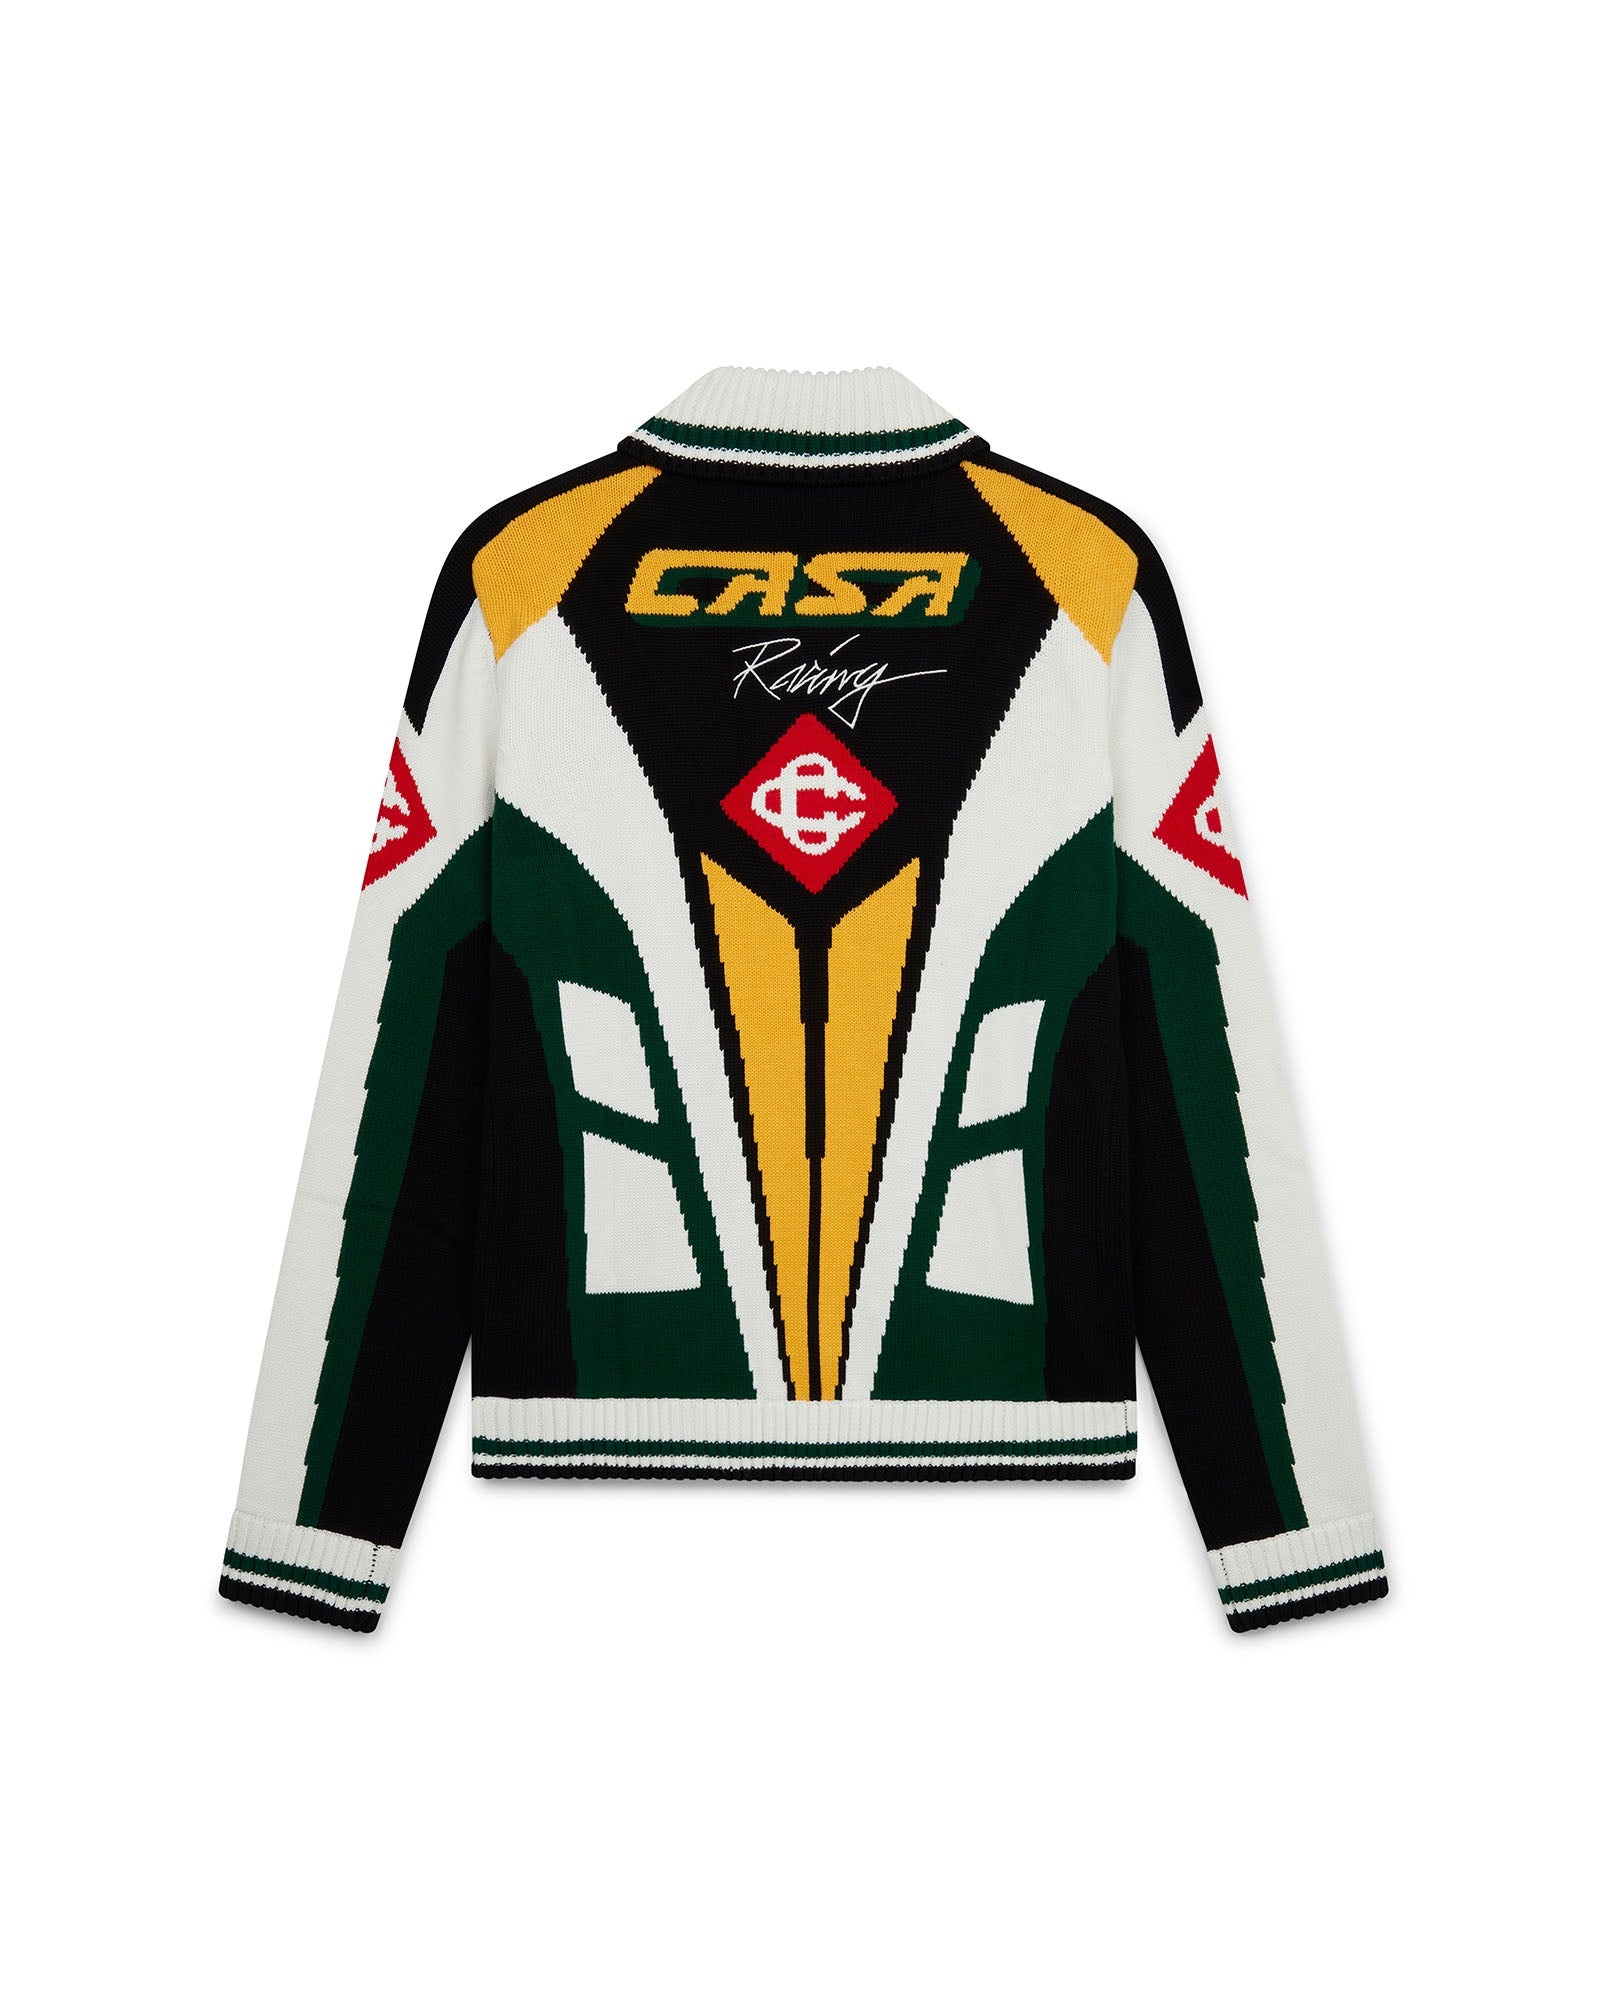 Casa Racing Knit Jacket - 2